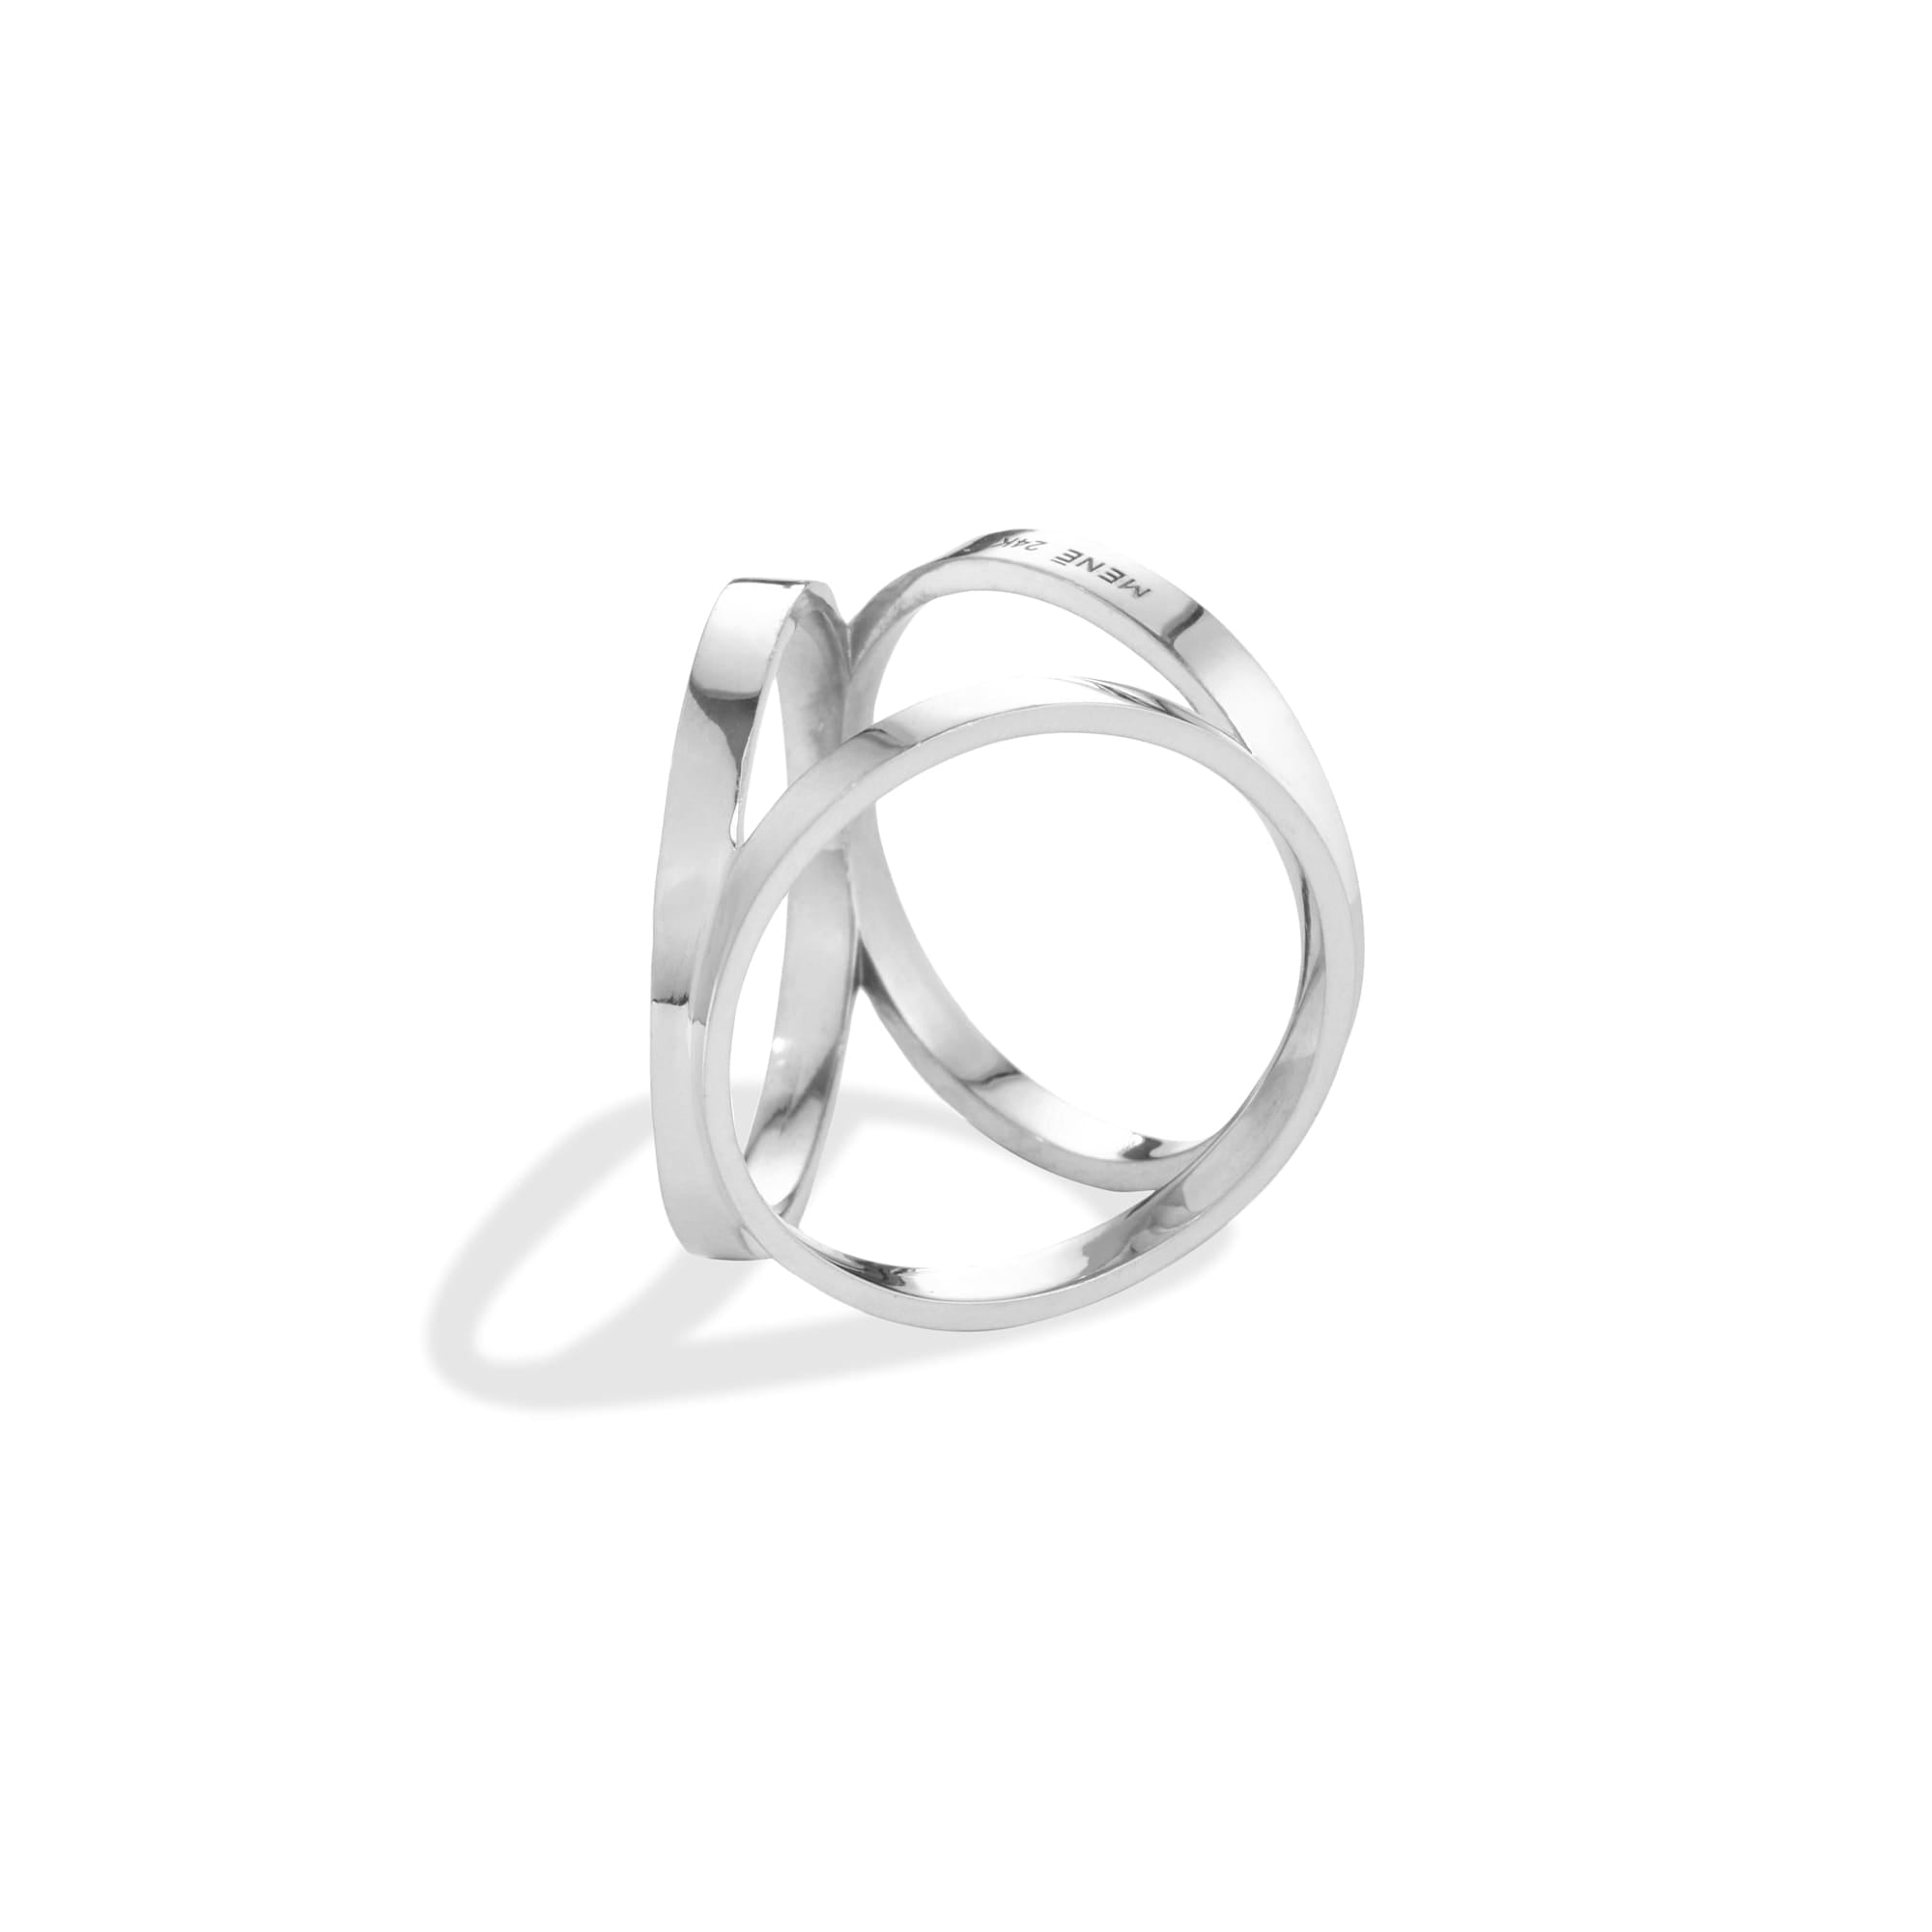 Menē Scarf Ring - 24K Platinum